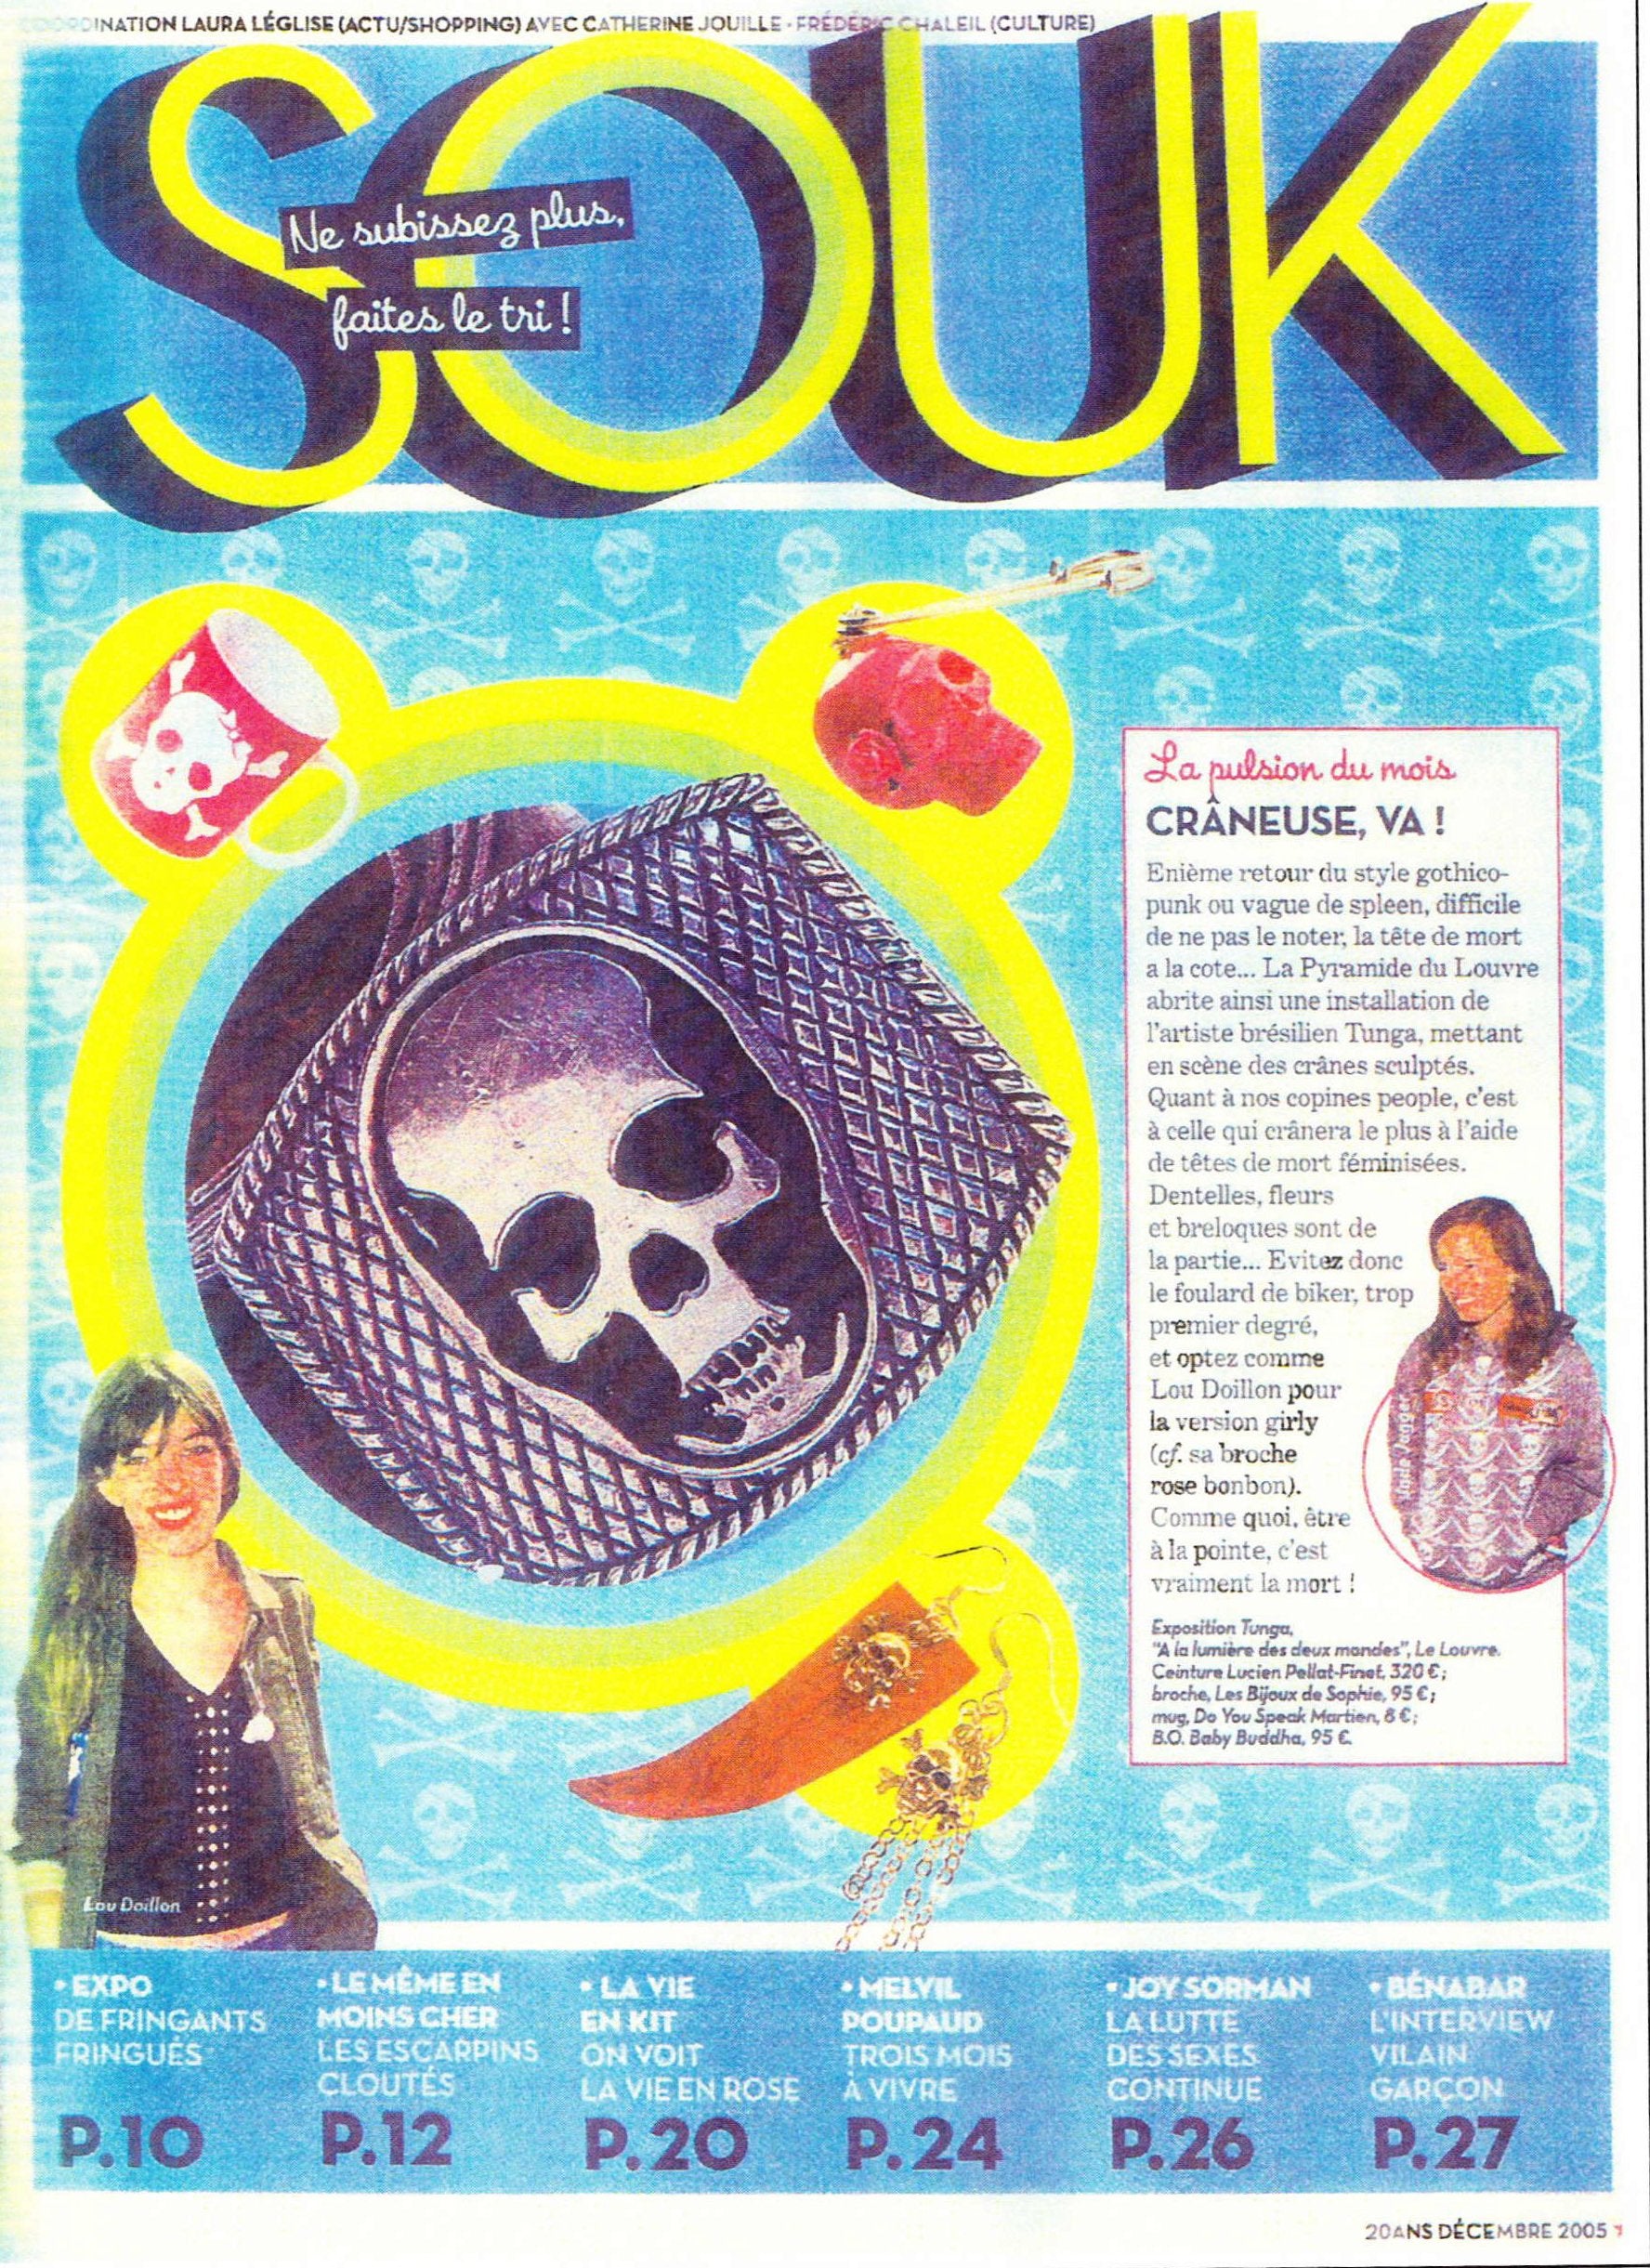 20 Anni Magazine (Paris) December 2005 - Erika Peña